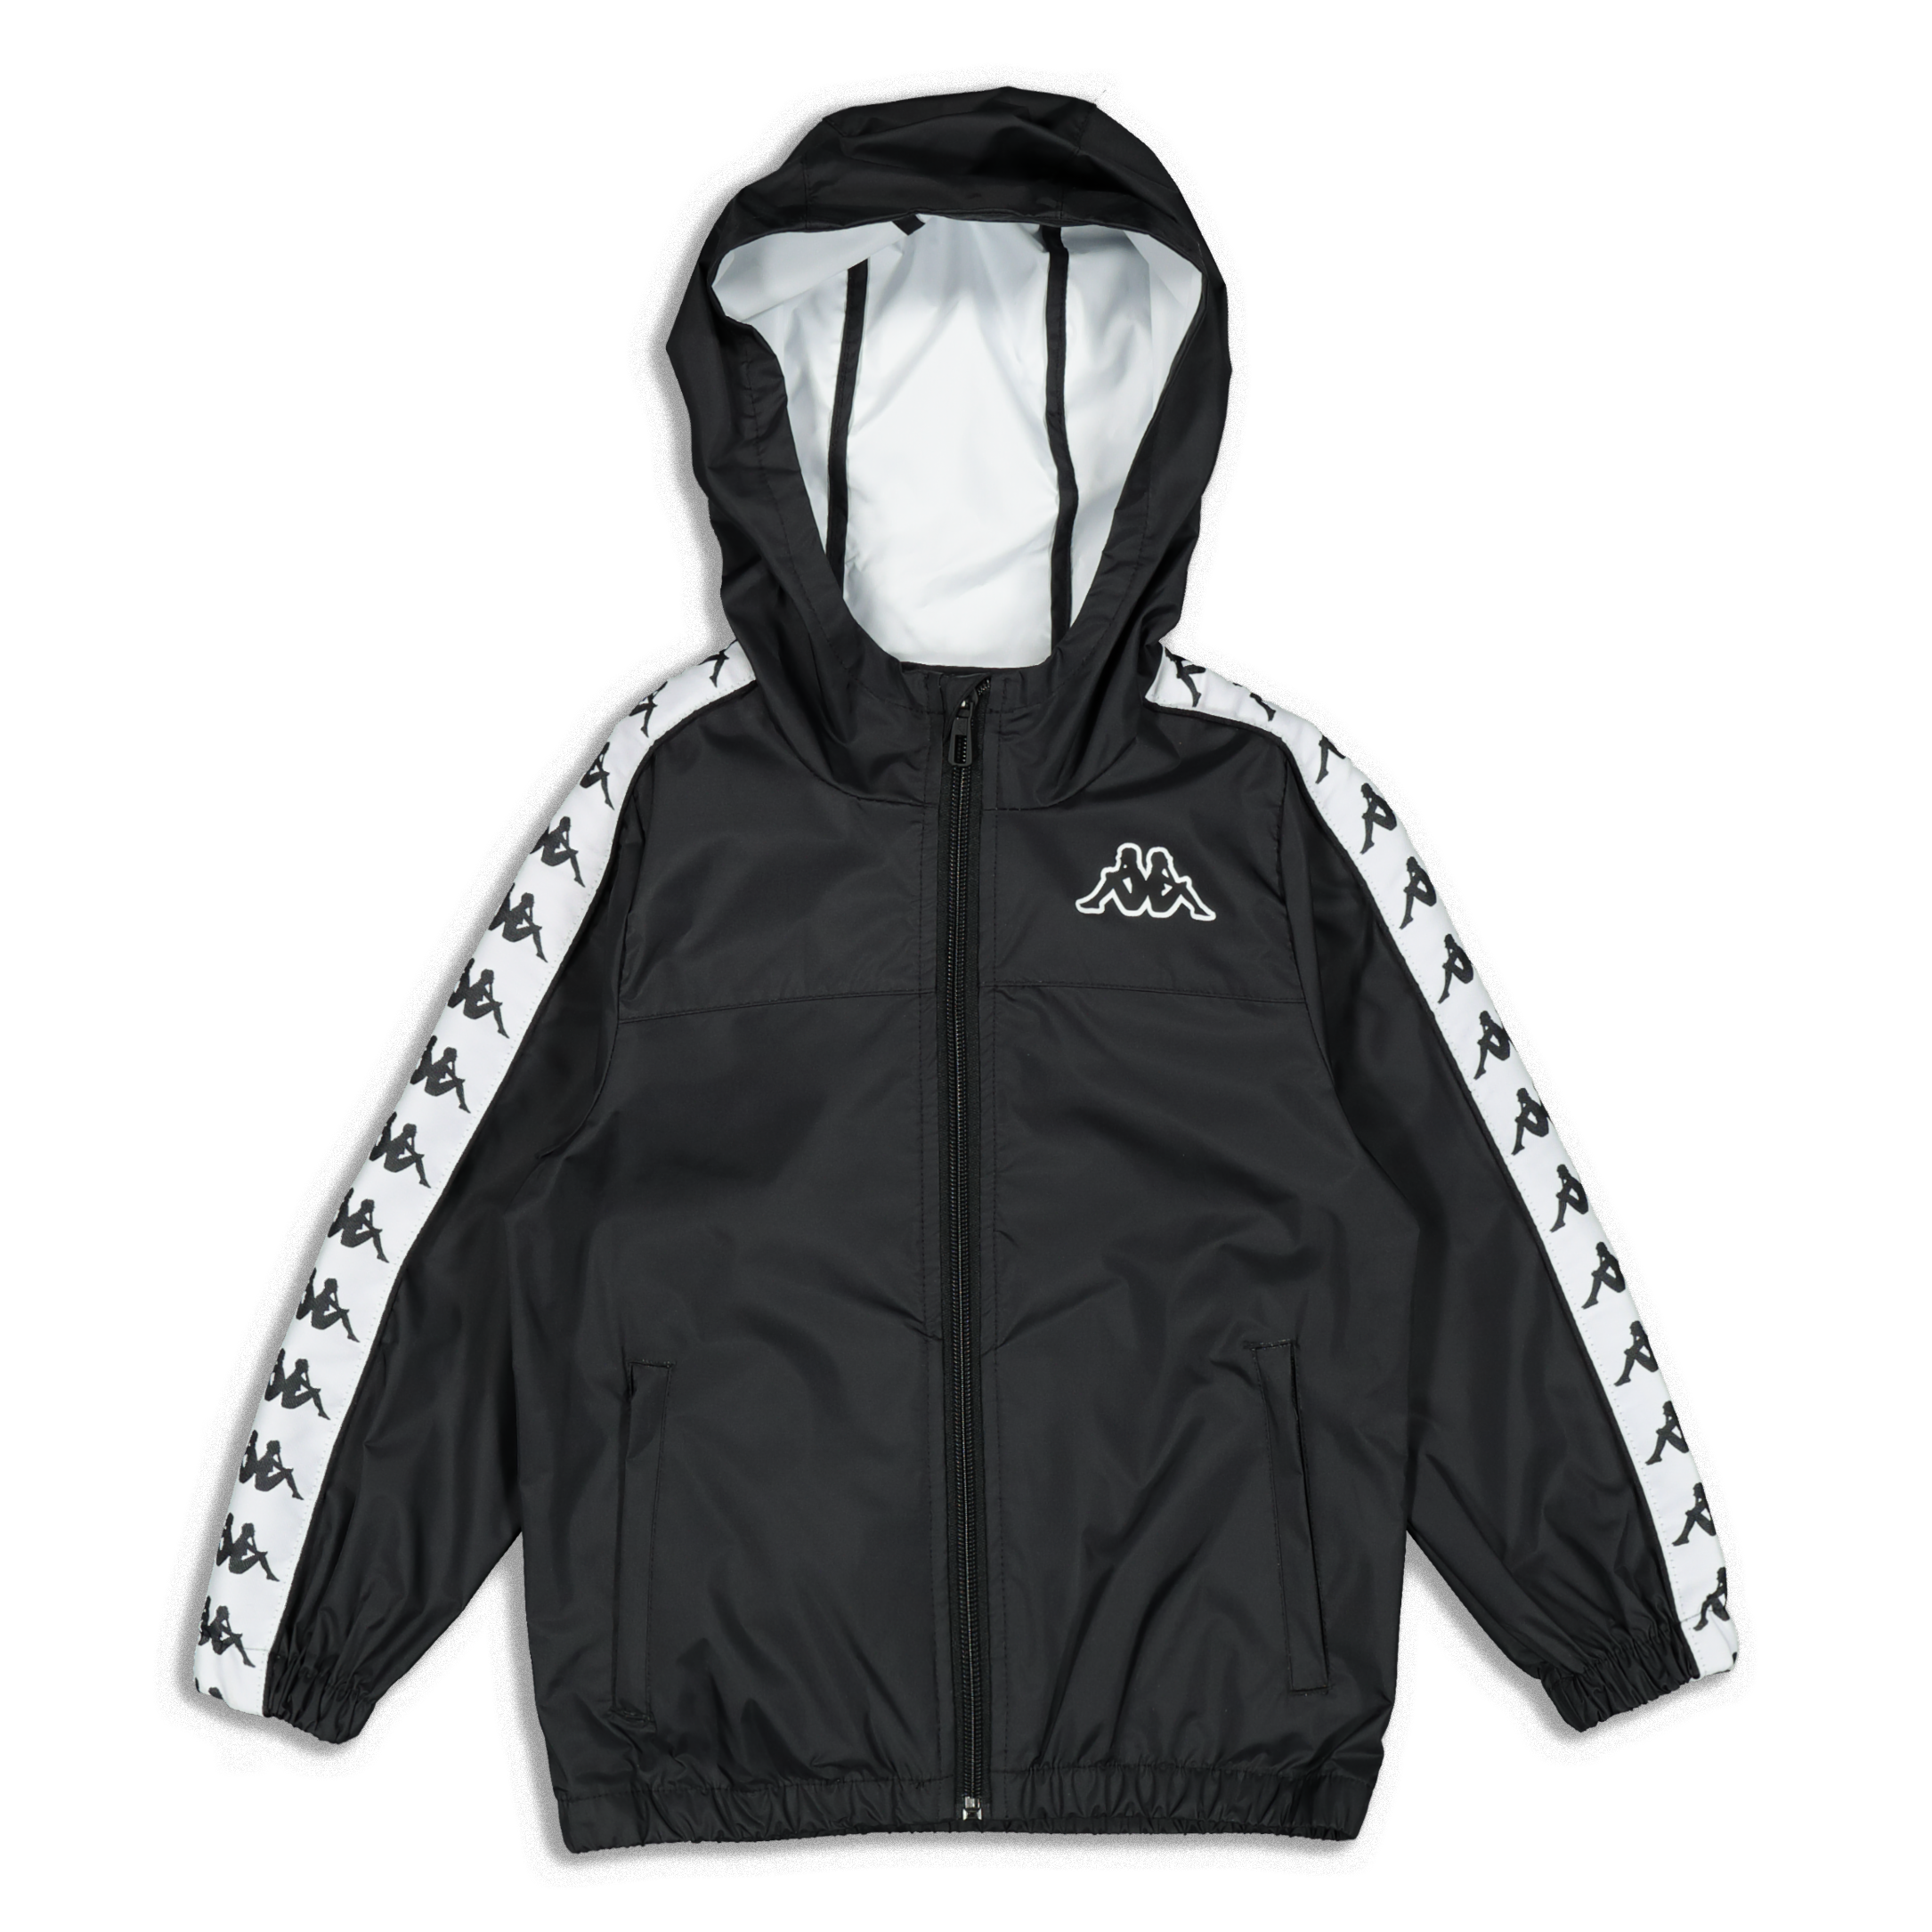 kappa black and white jacket